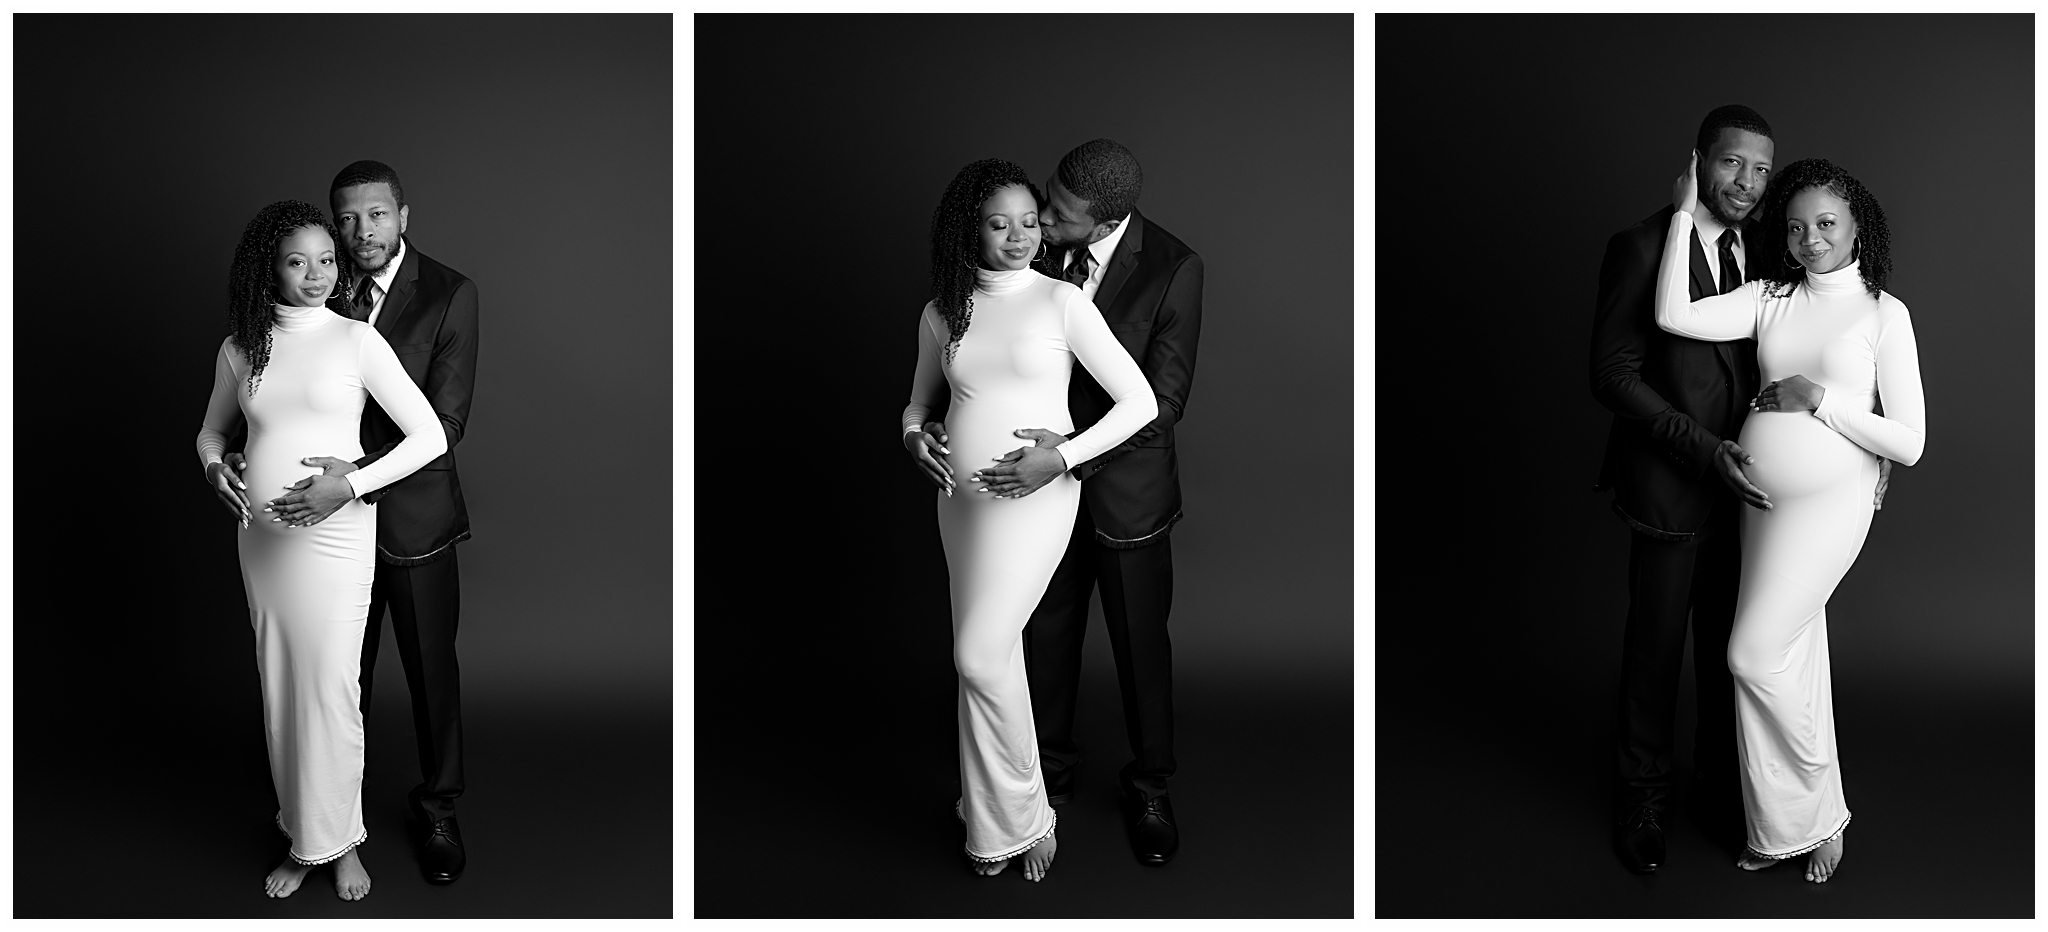 couple maternity photoshoot ideas white maternity dress black suit